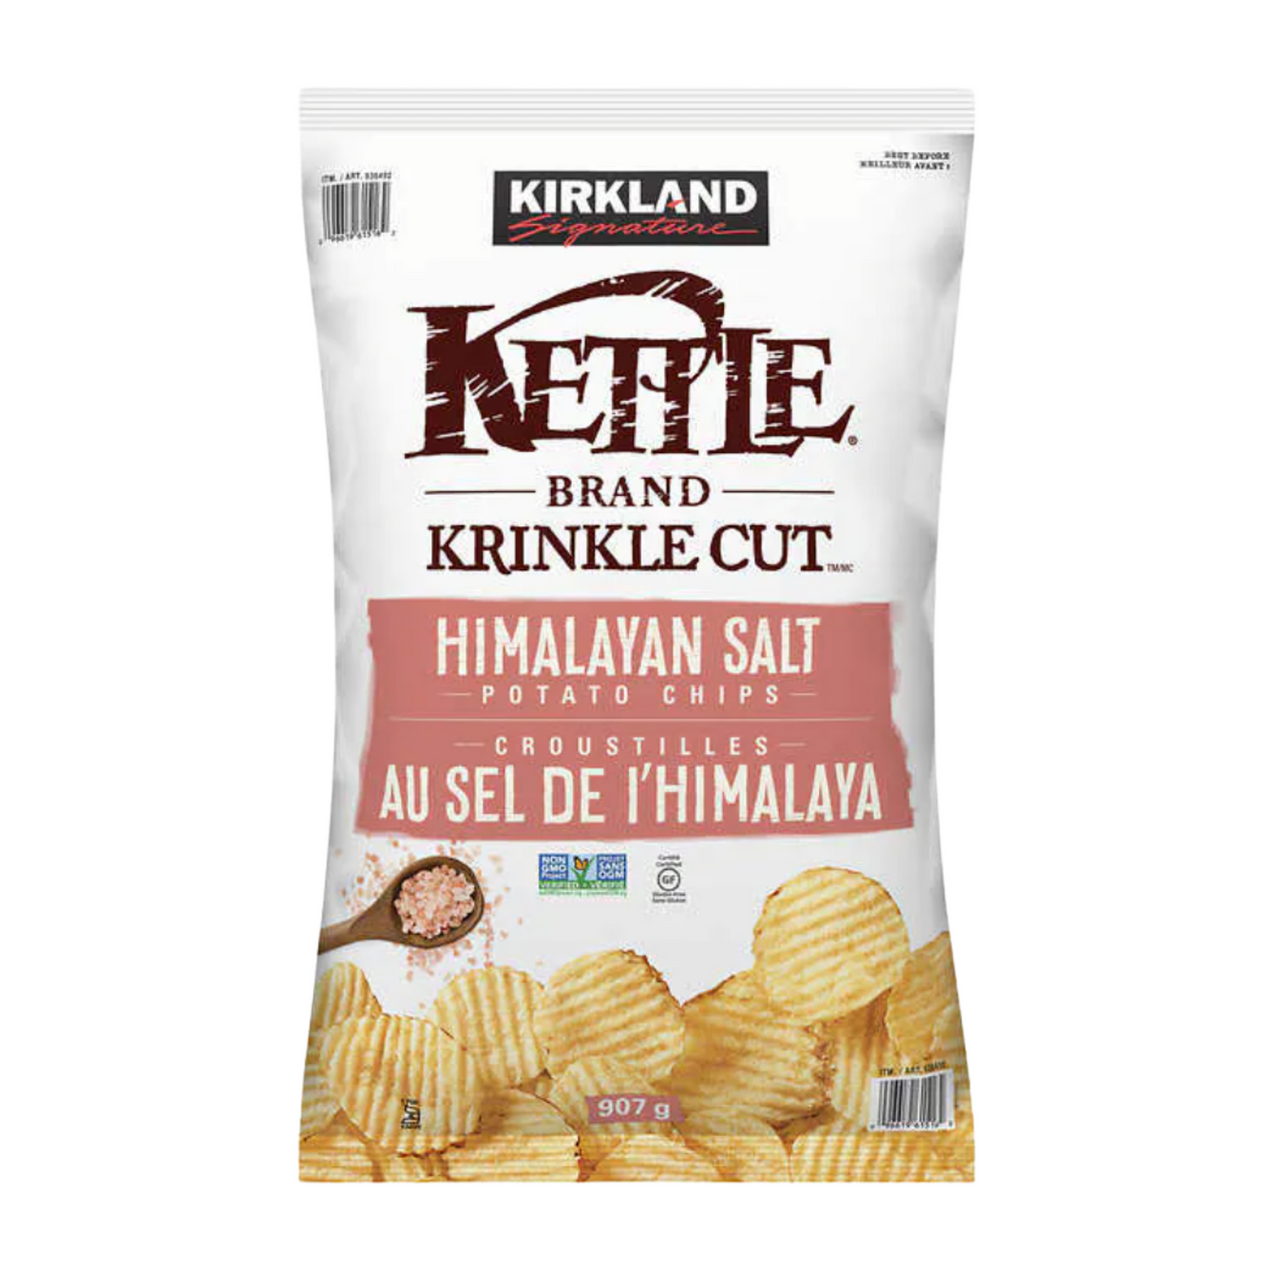 Image of Kirkland Signature Kettle Brand Krinkle Cut Himalayan Salt Potato Chips - 1 x 907 Grams